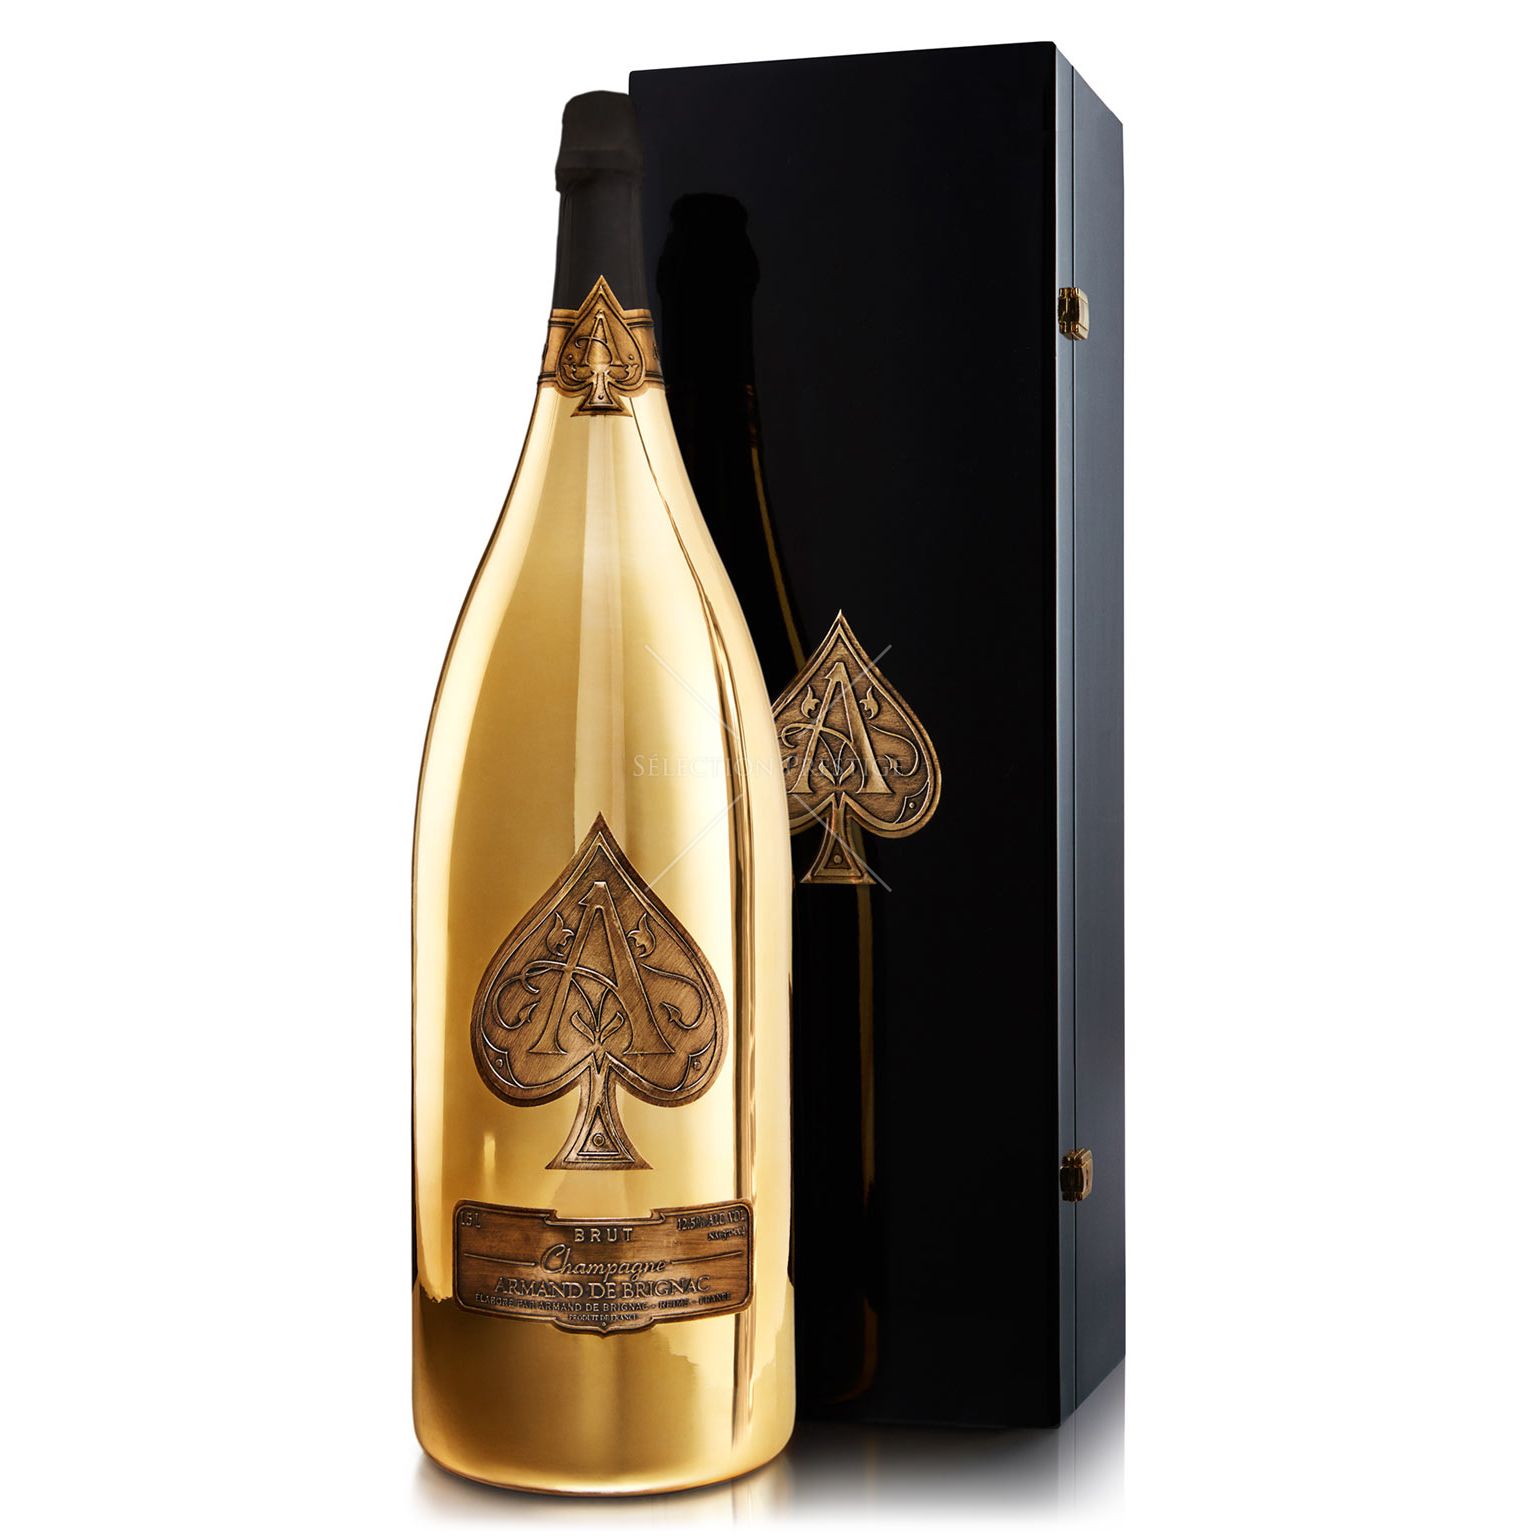 most expensive champagne - 2011 Armand de Brignac 15-Liter - $90,000 